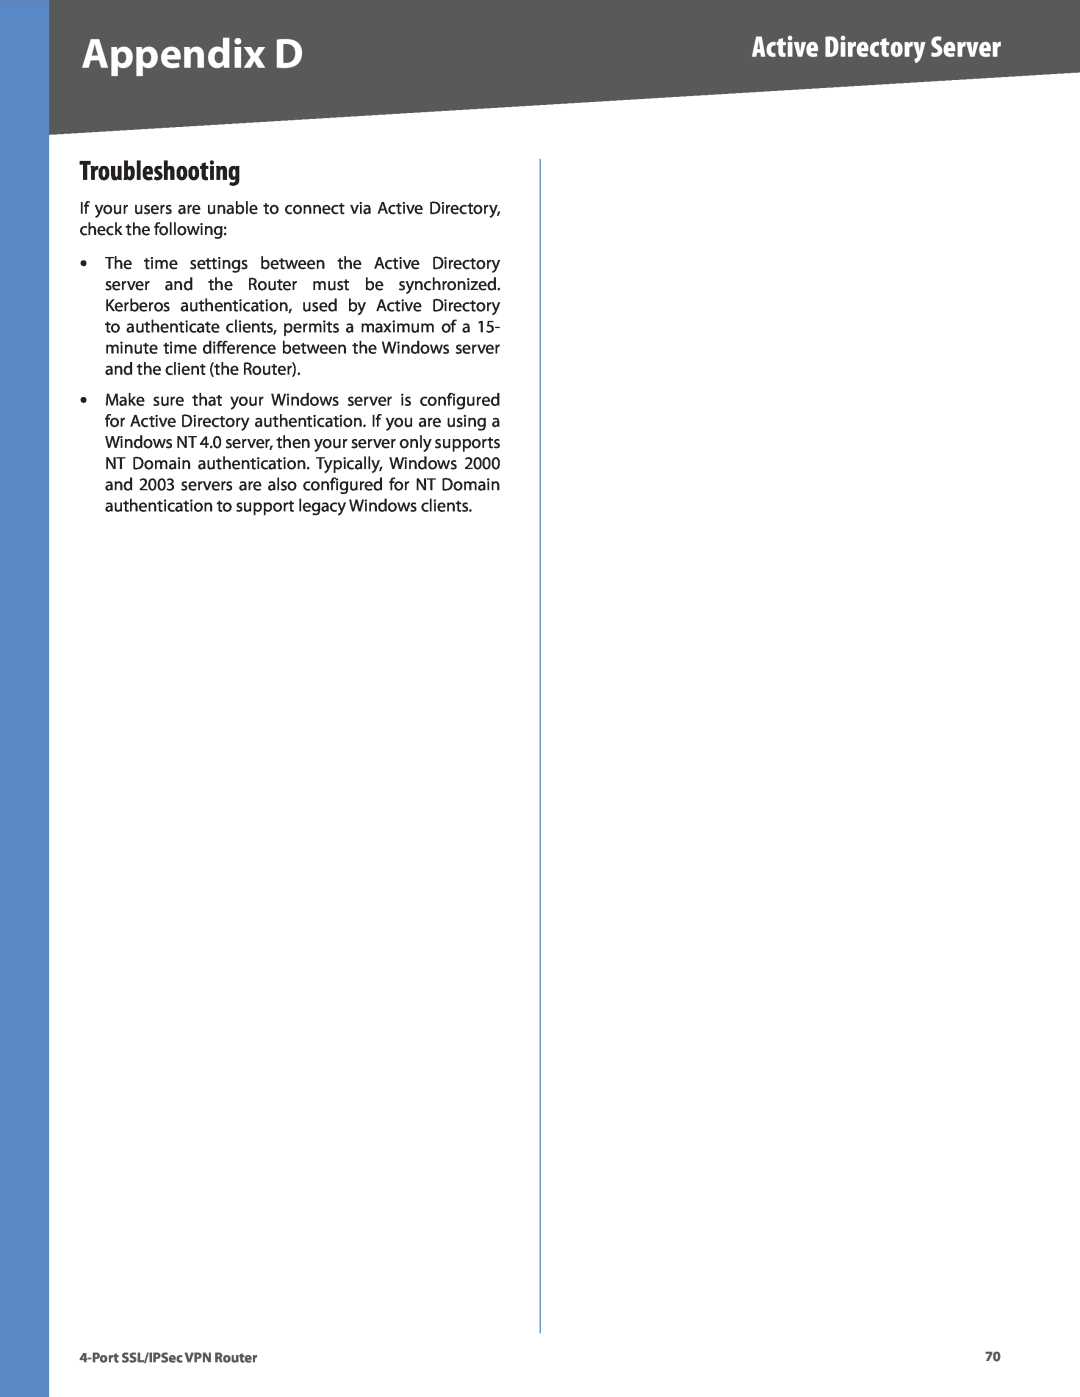 Cisco Systems RVL200 manual Troubleshooting, Appendix D, Active Directory Server 